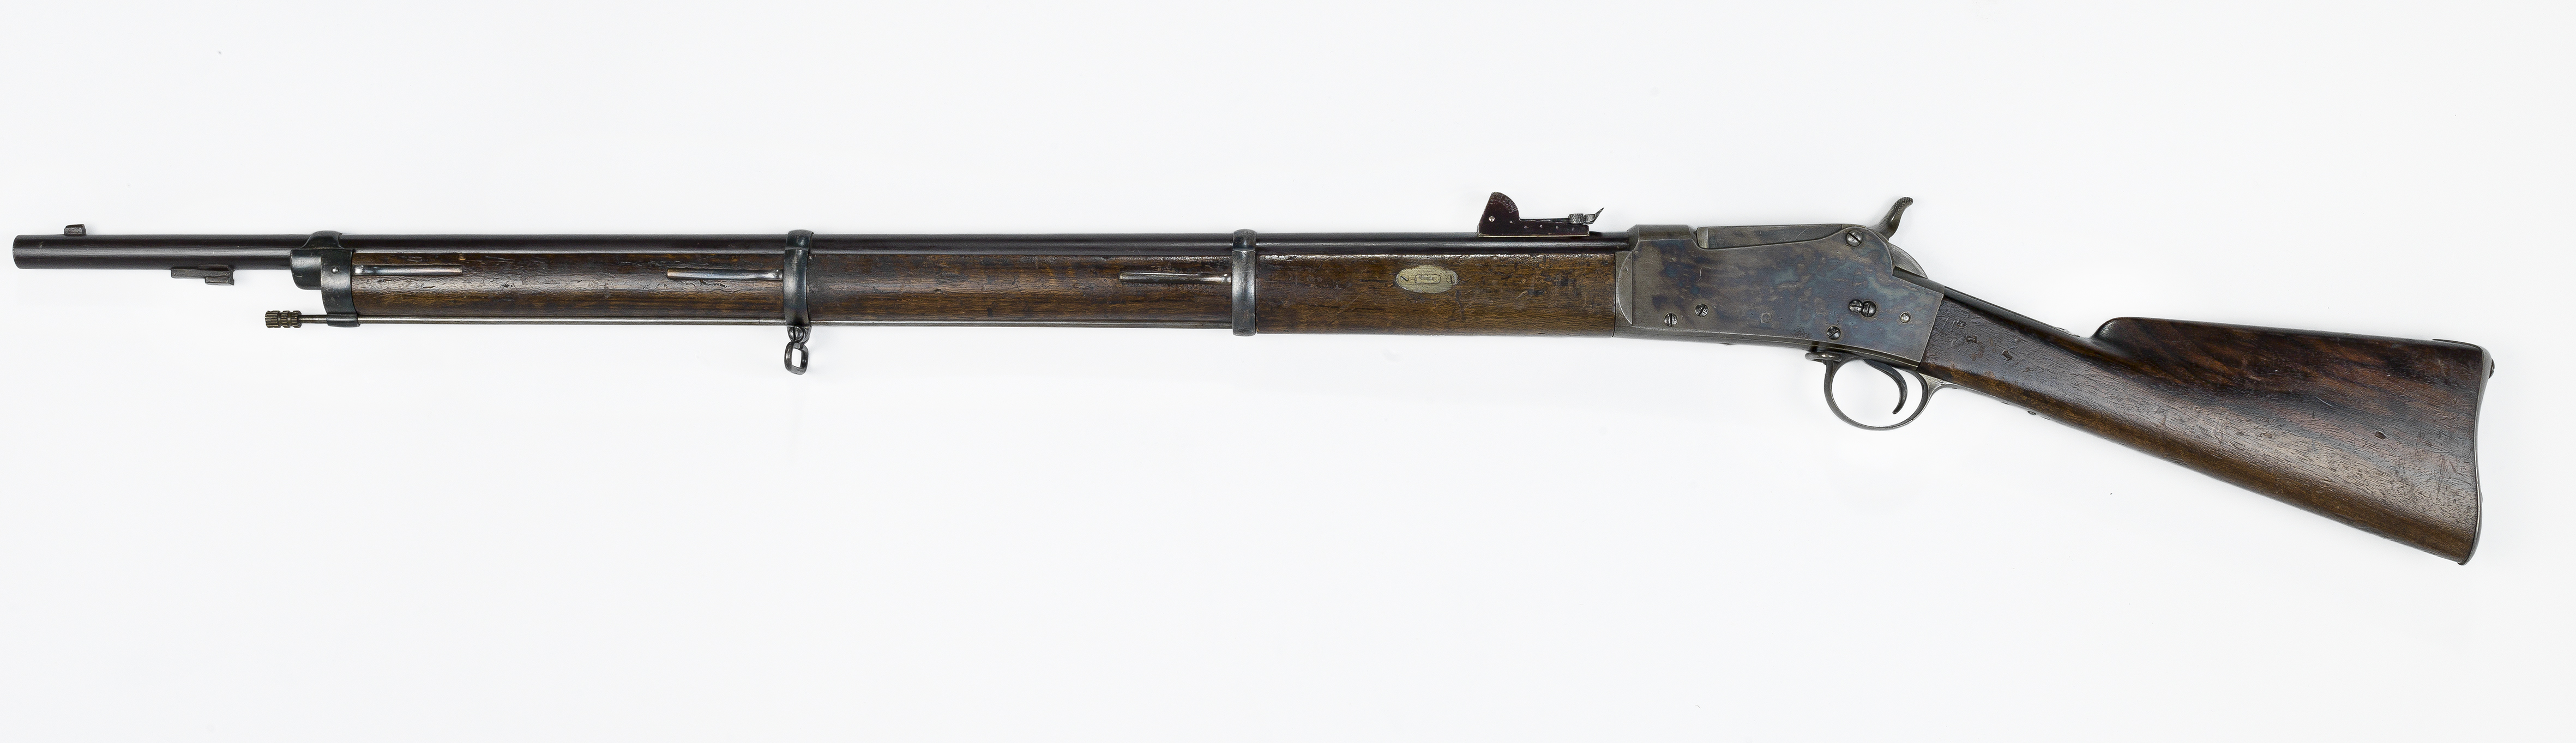 ./guns/rifle/bilder/Rifle-Kongsberg-Krag-Petersson-Prove-1873-1874-2.jpg